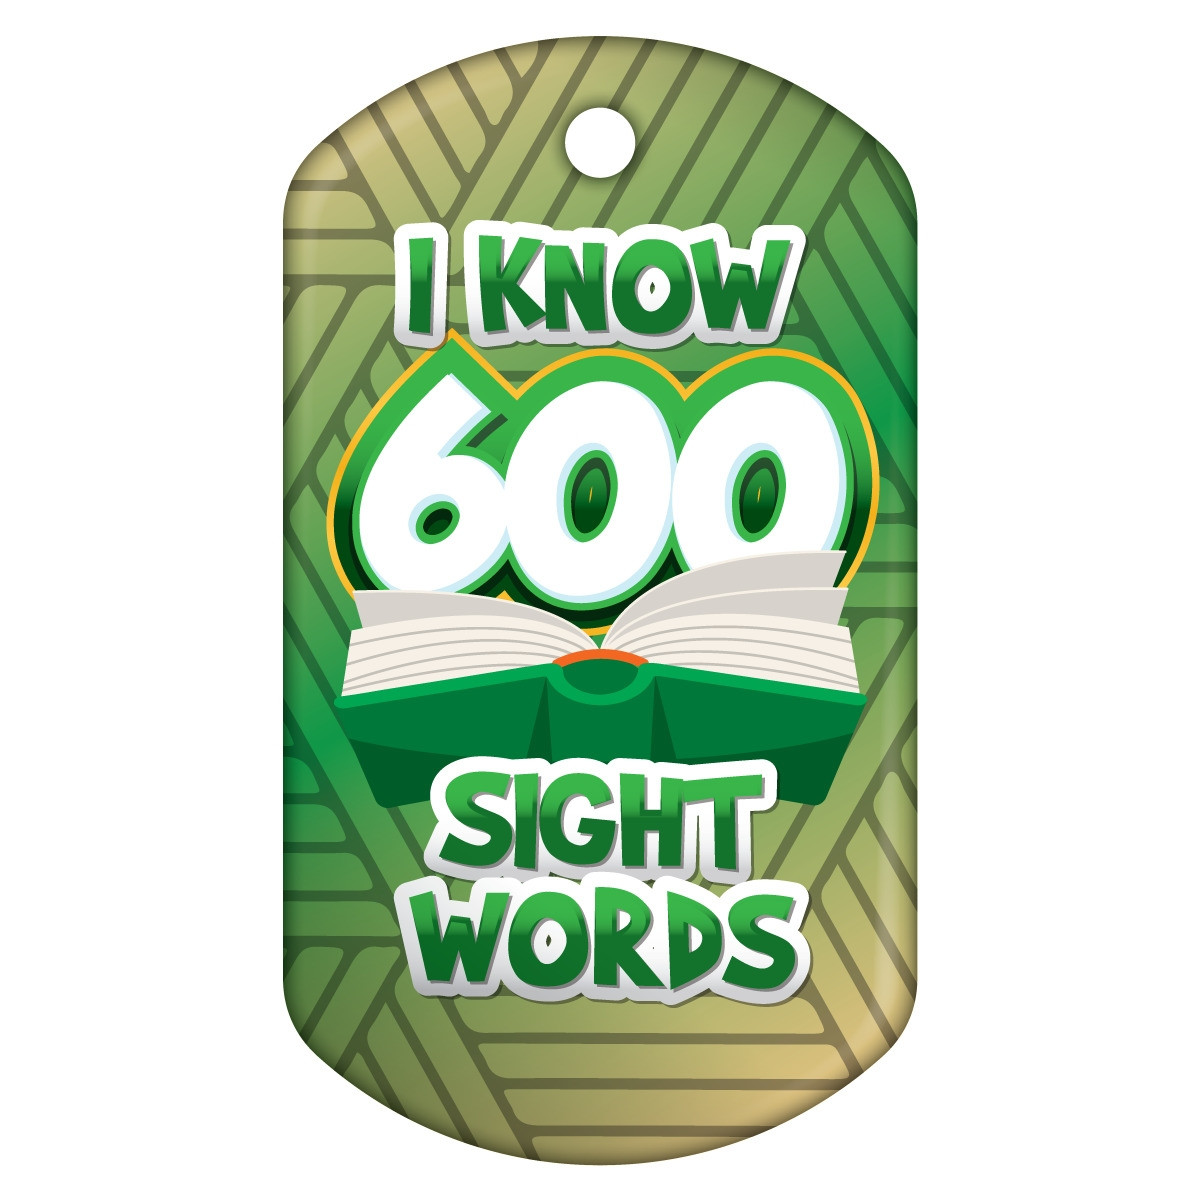 Dog Brag Tags - I Know 600 Sight Words